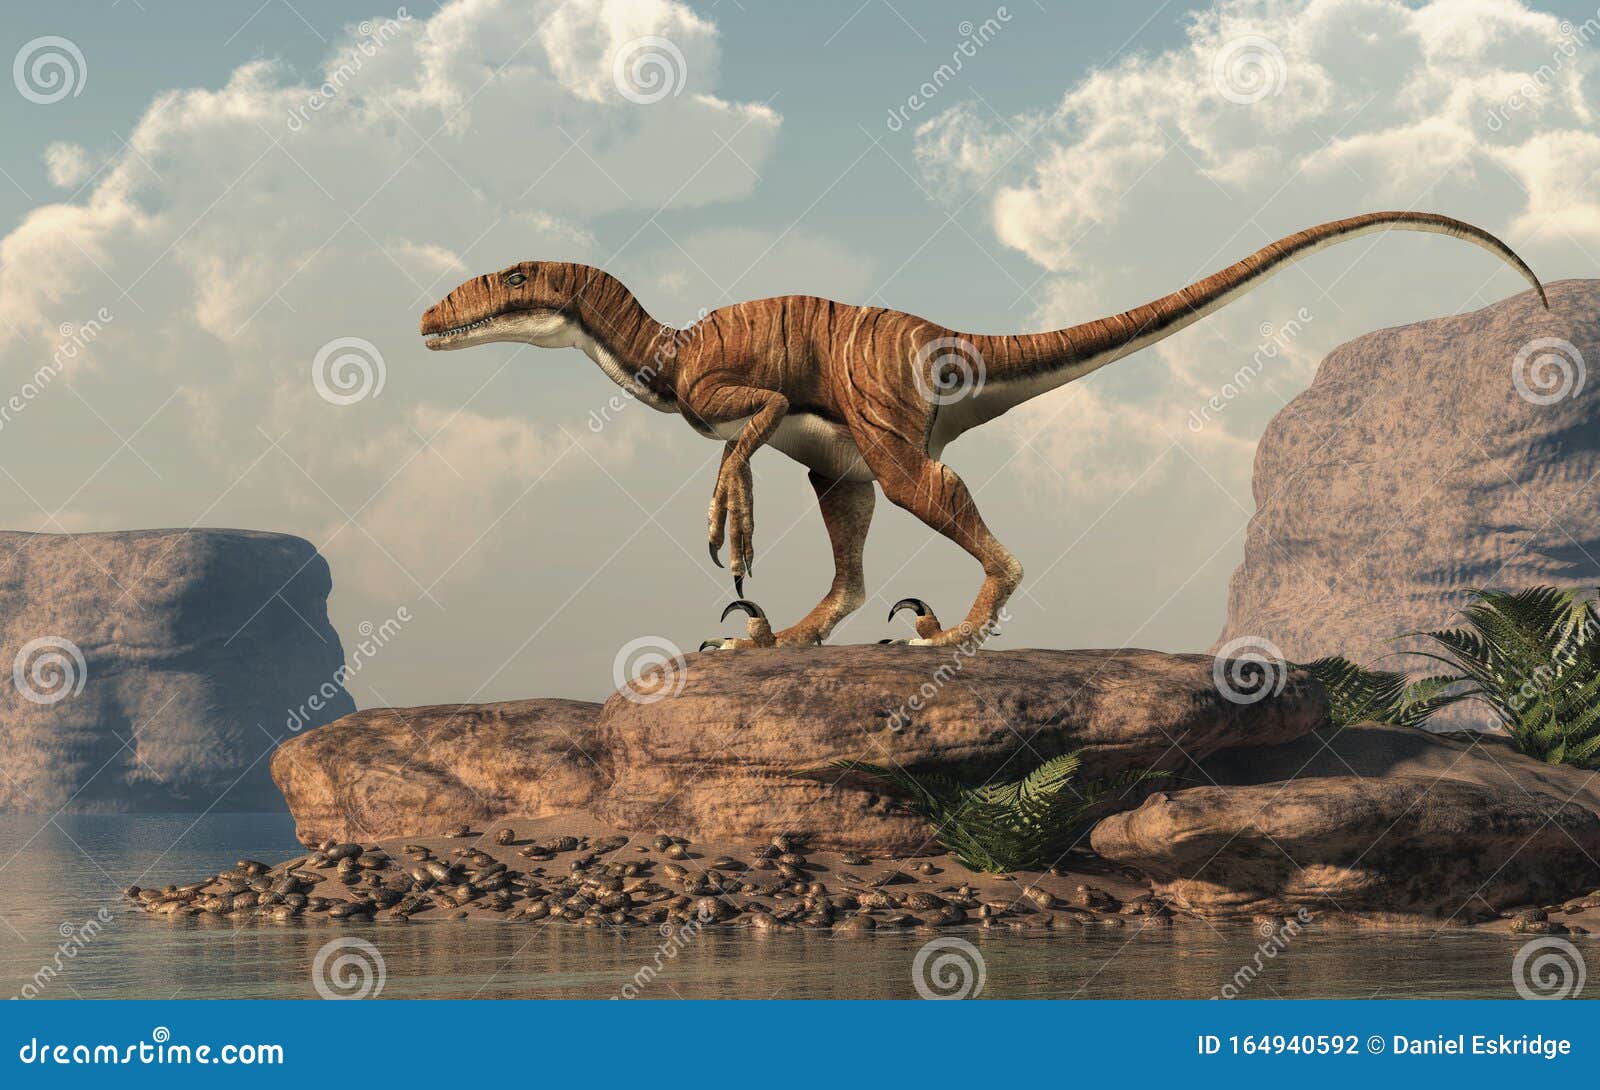 1) Deinonychus 2) Pterodactyl 3) Archaeopteryx 4) Parasaurolophus 5)  Pachycephalosaurus